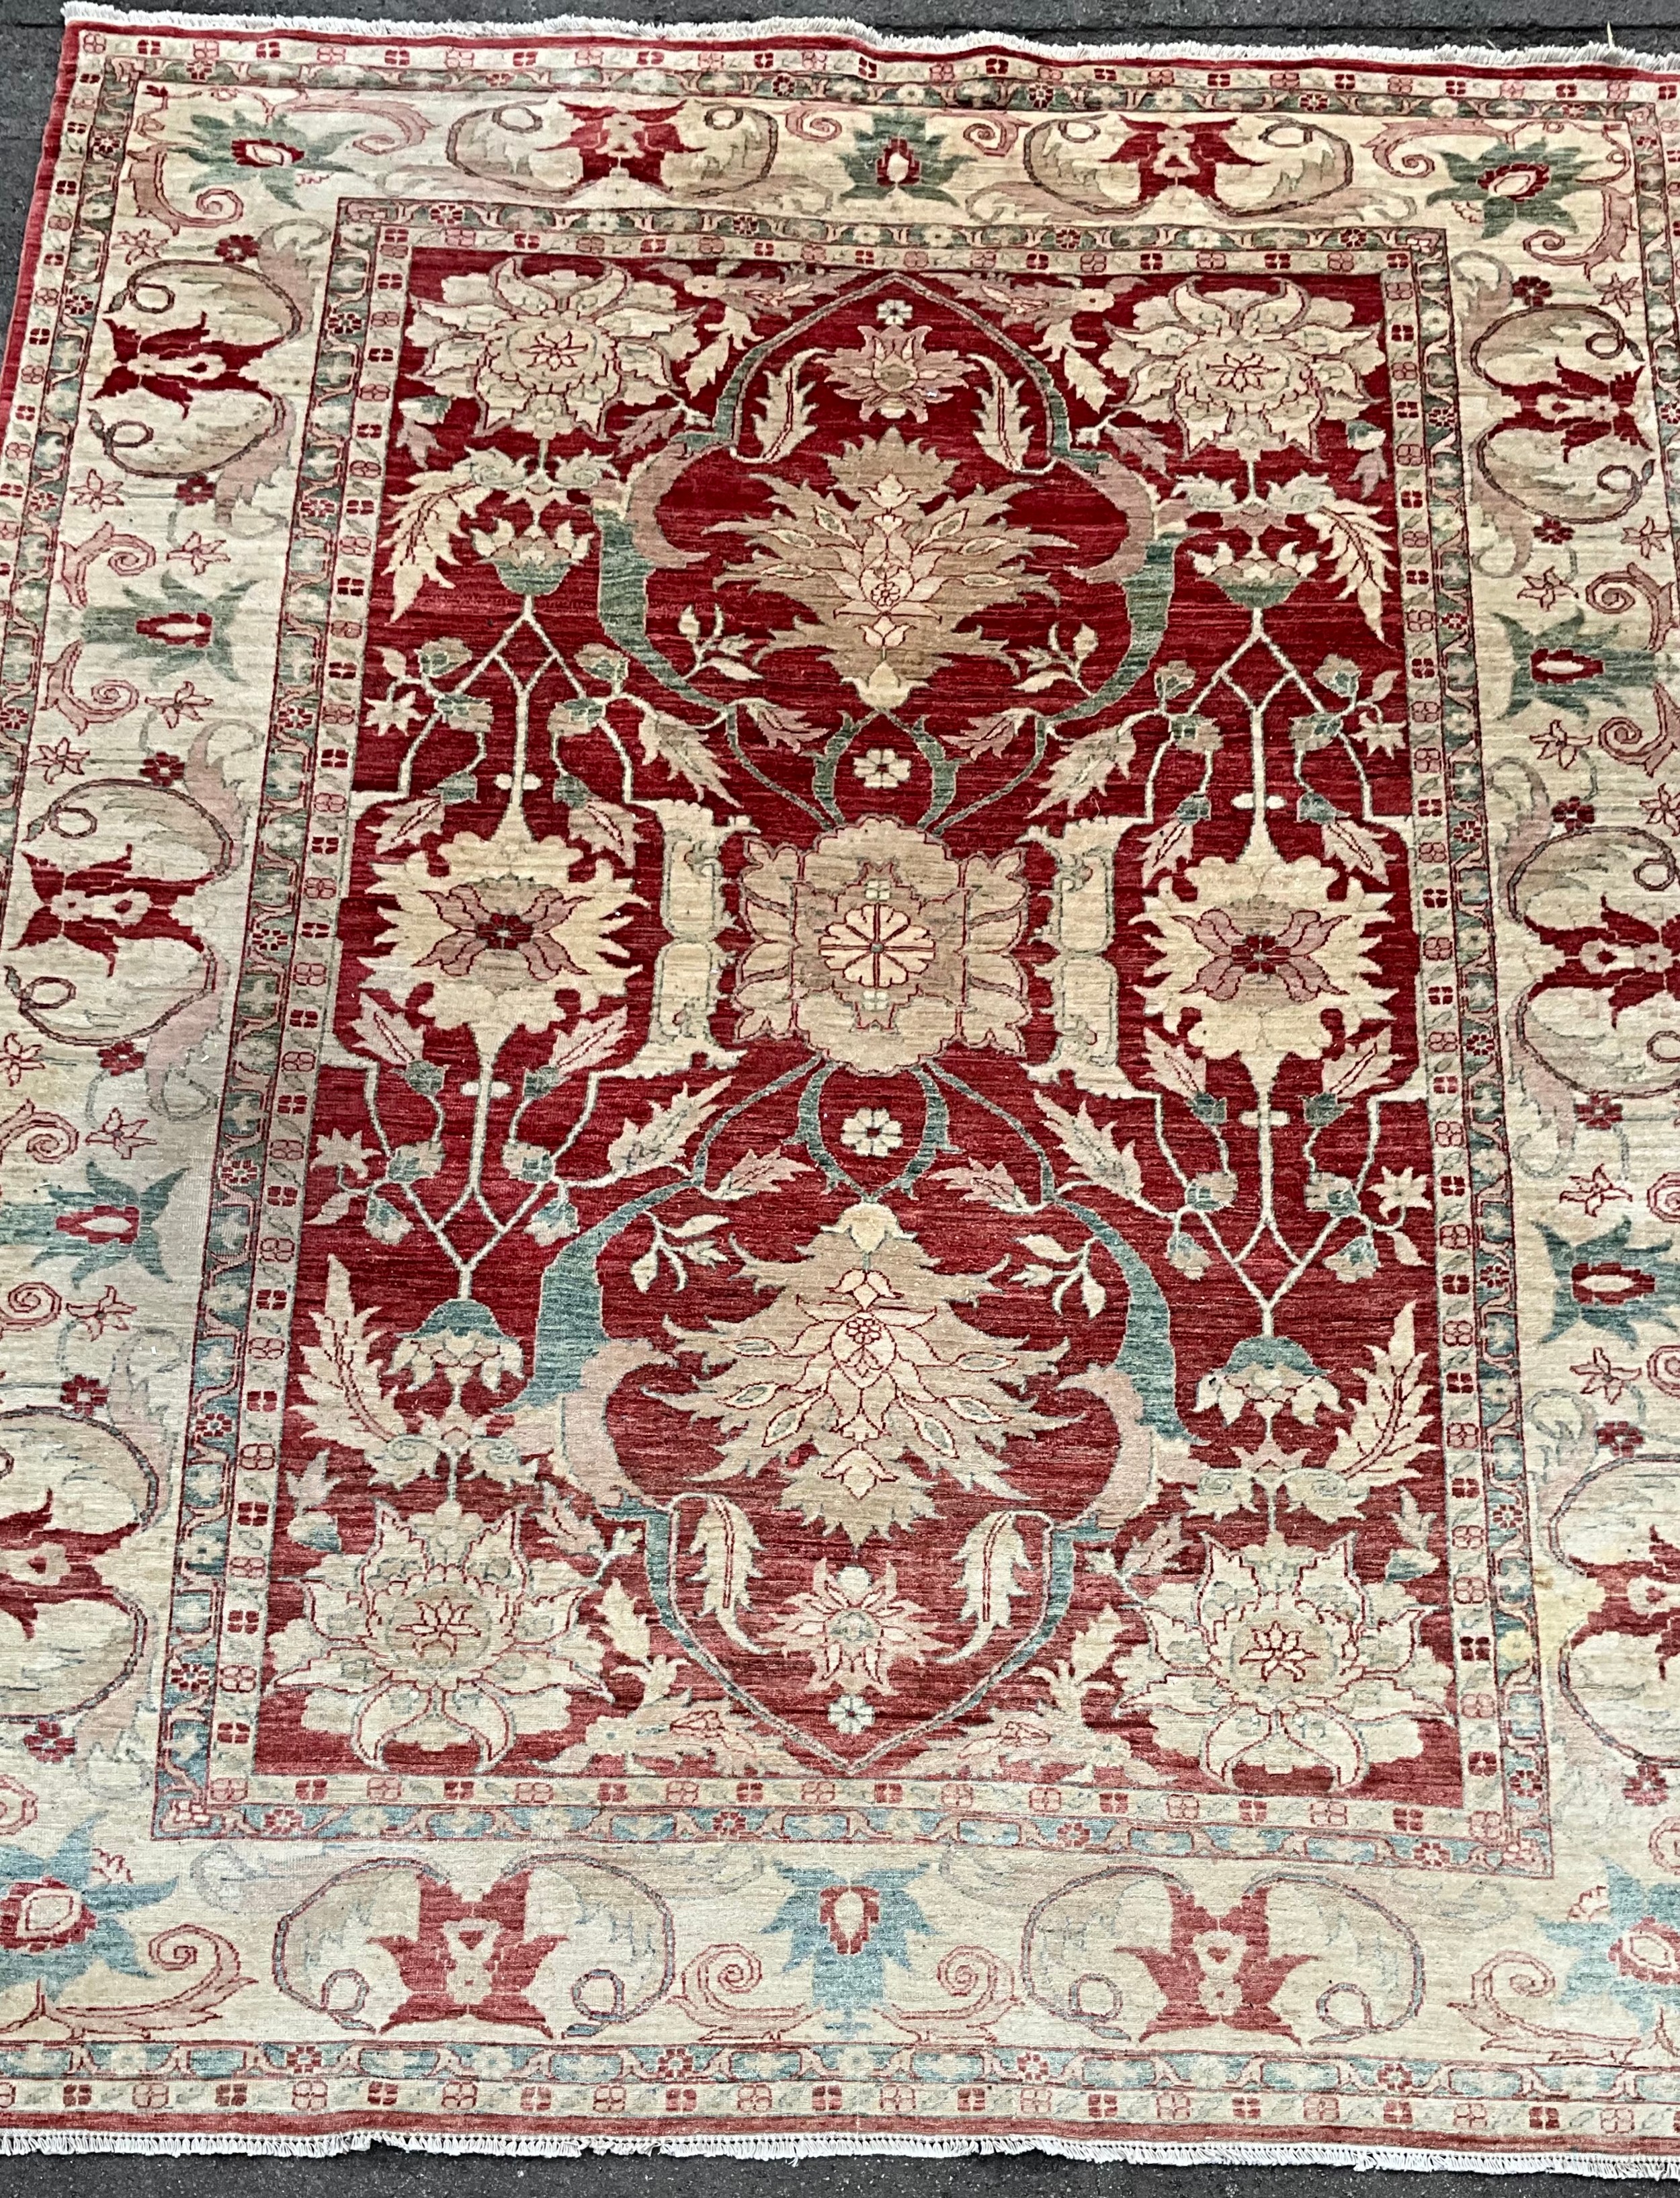 An Indian design Agra type wool rug or carpet, 363cm x 277cm